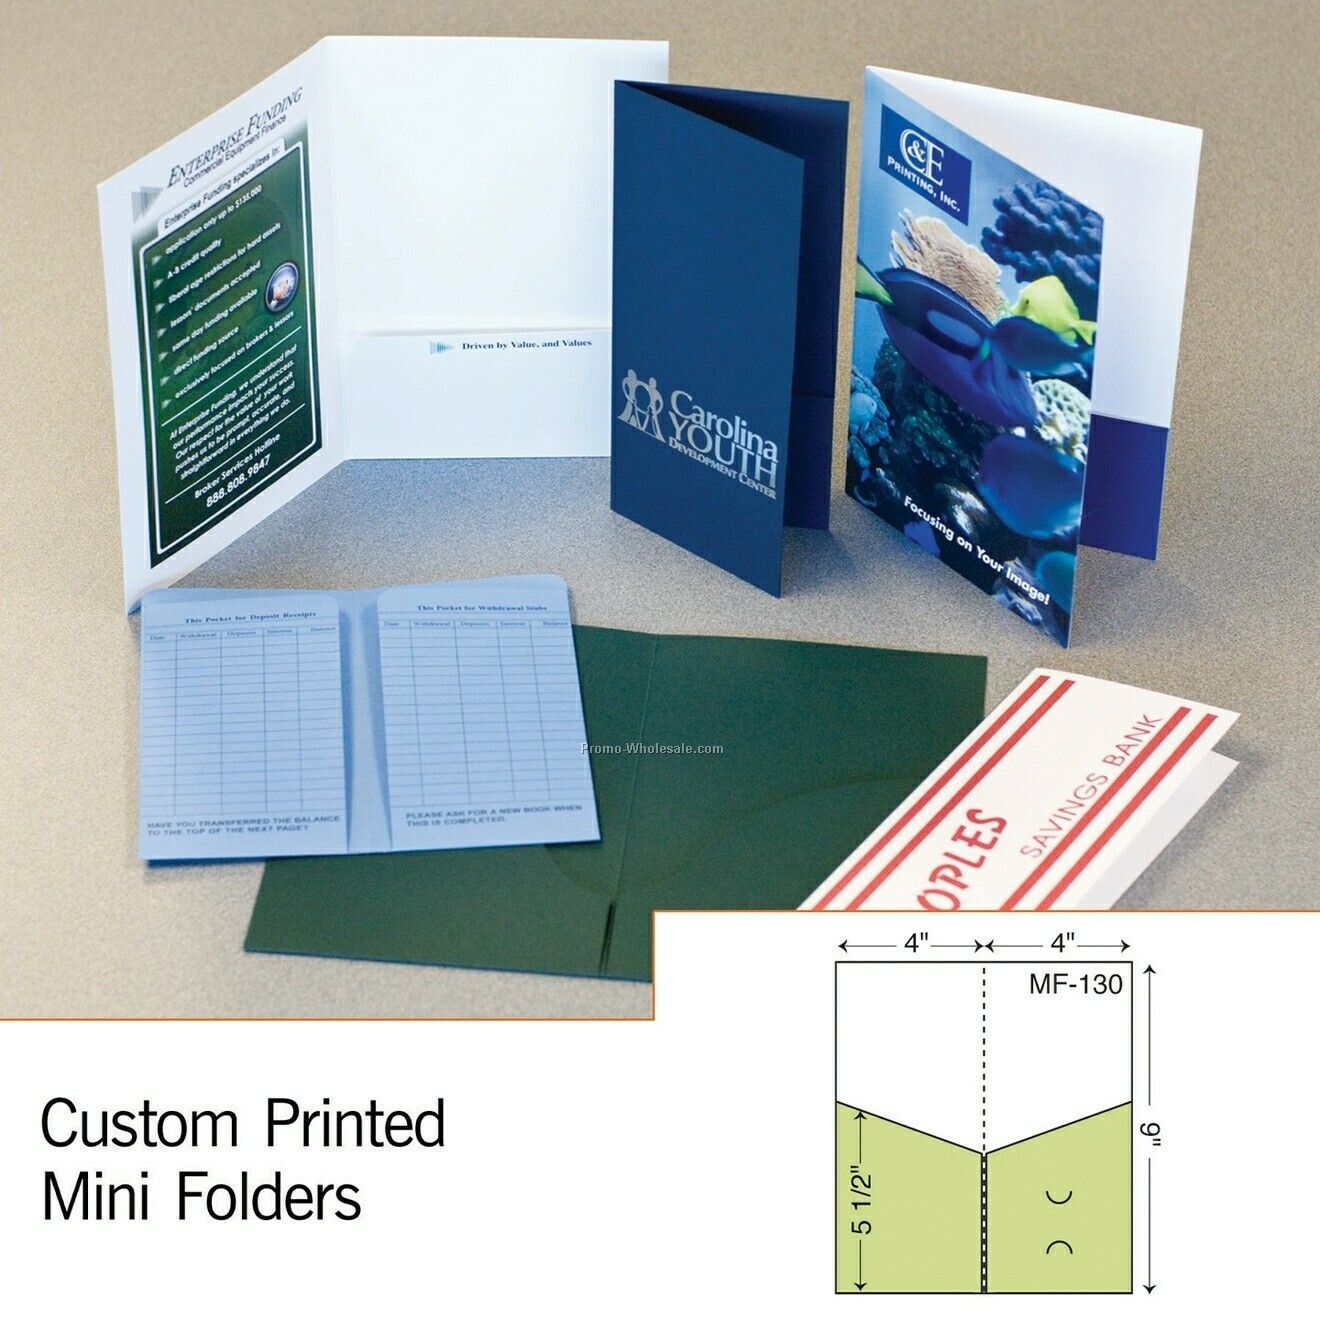 4"x9" Mini Folder W/ Right Pocket (2 Color)